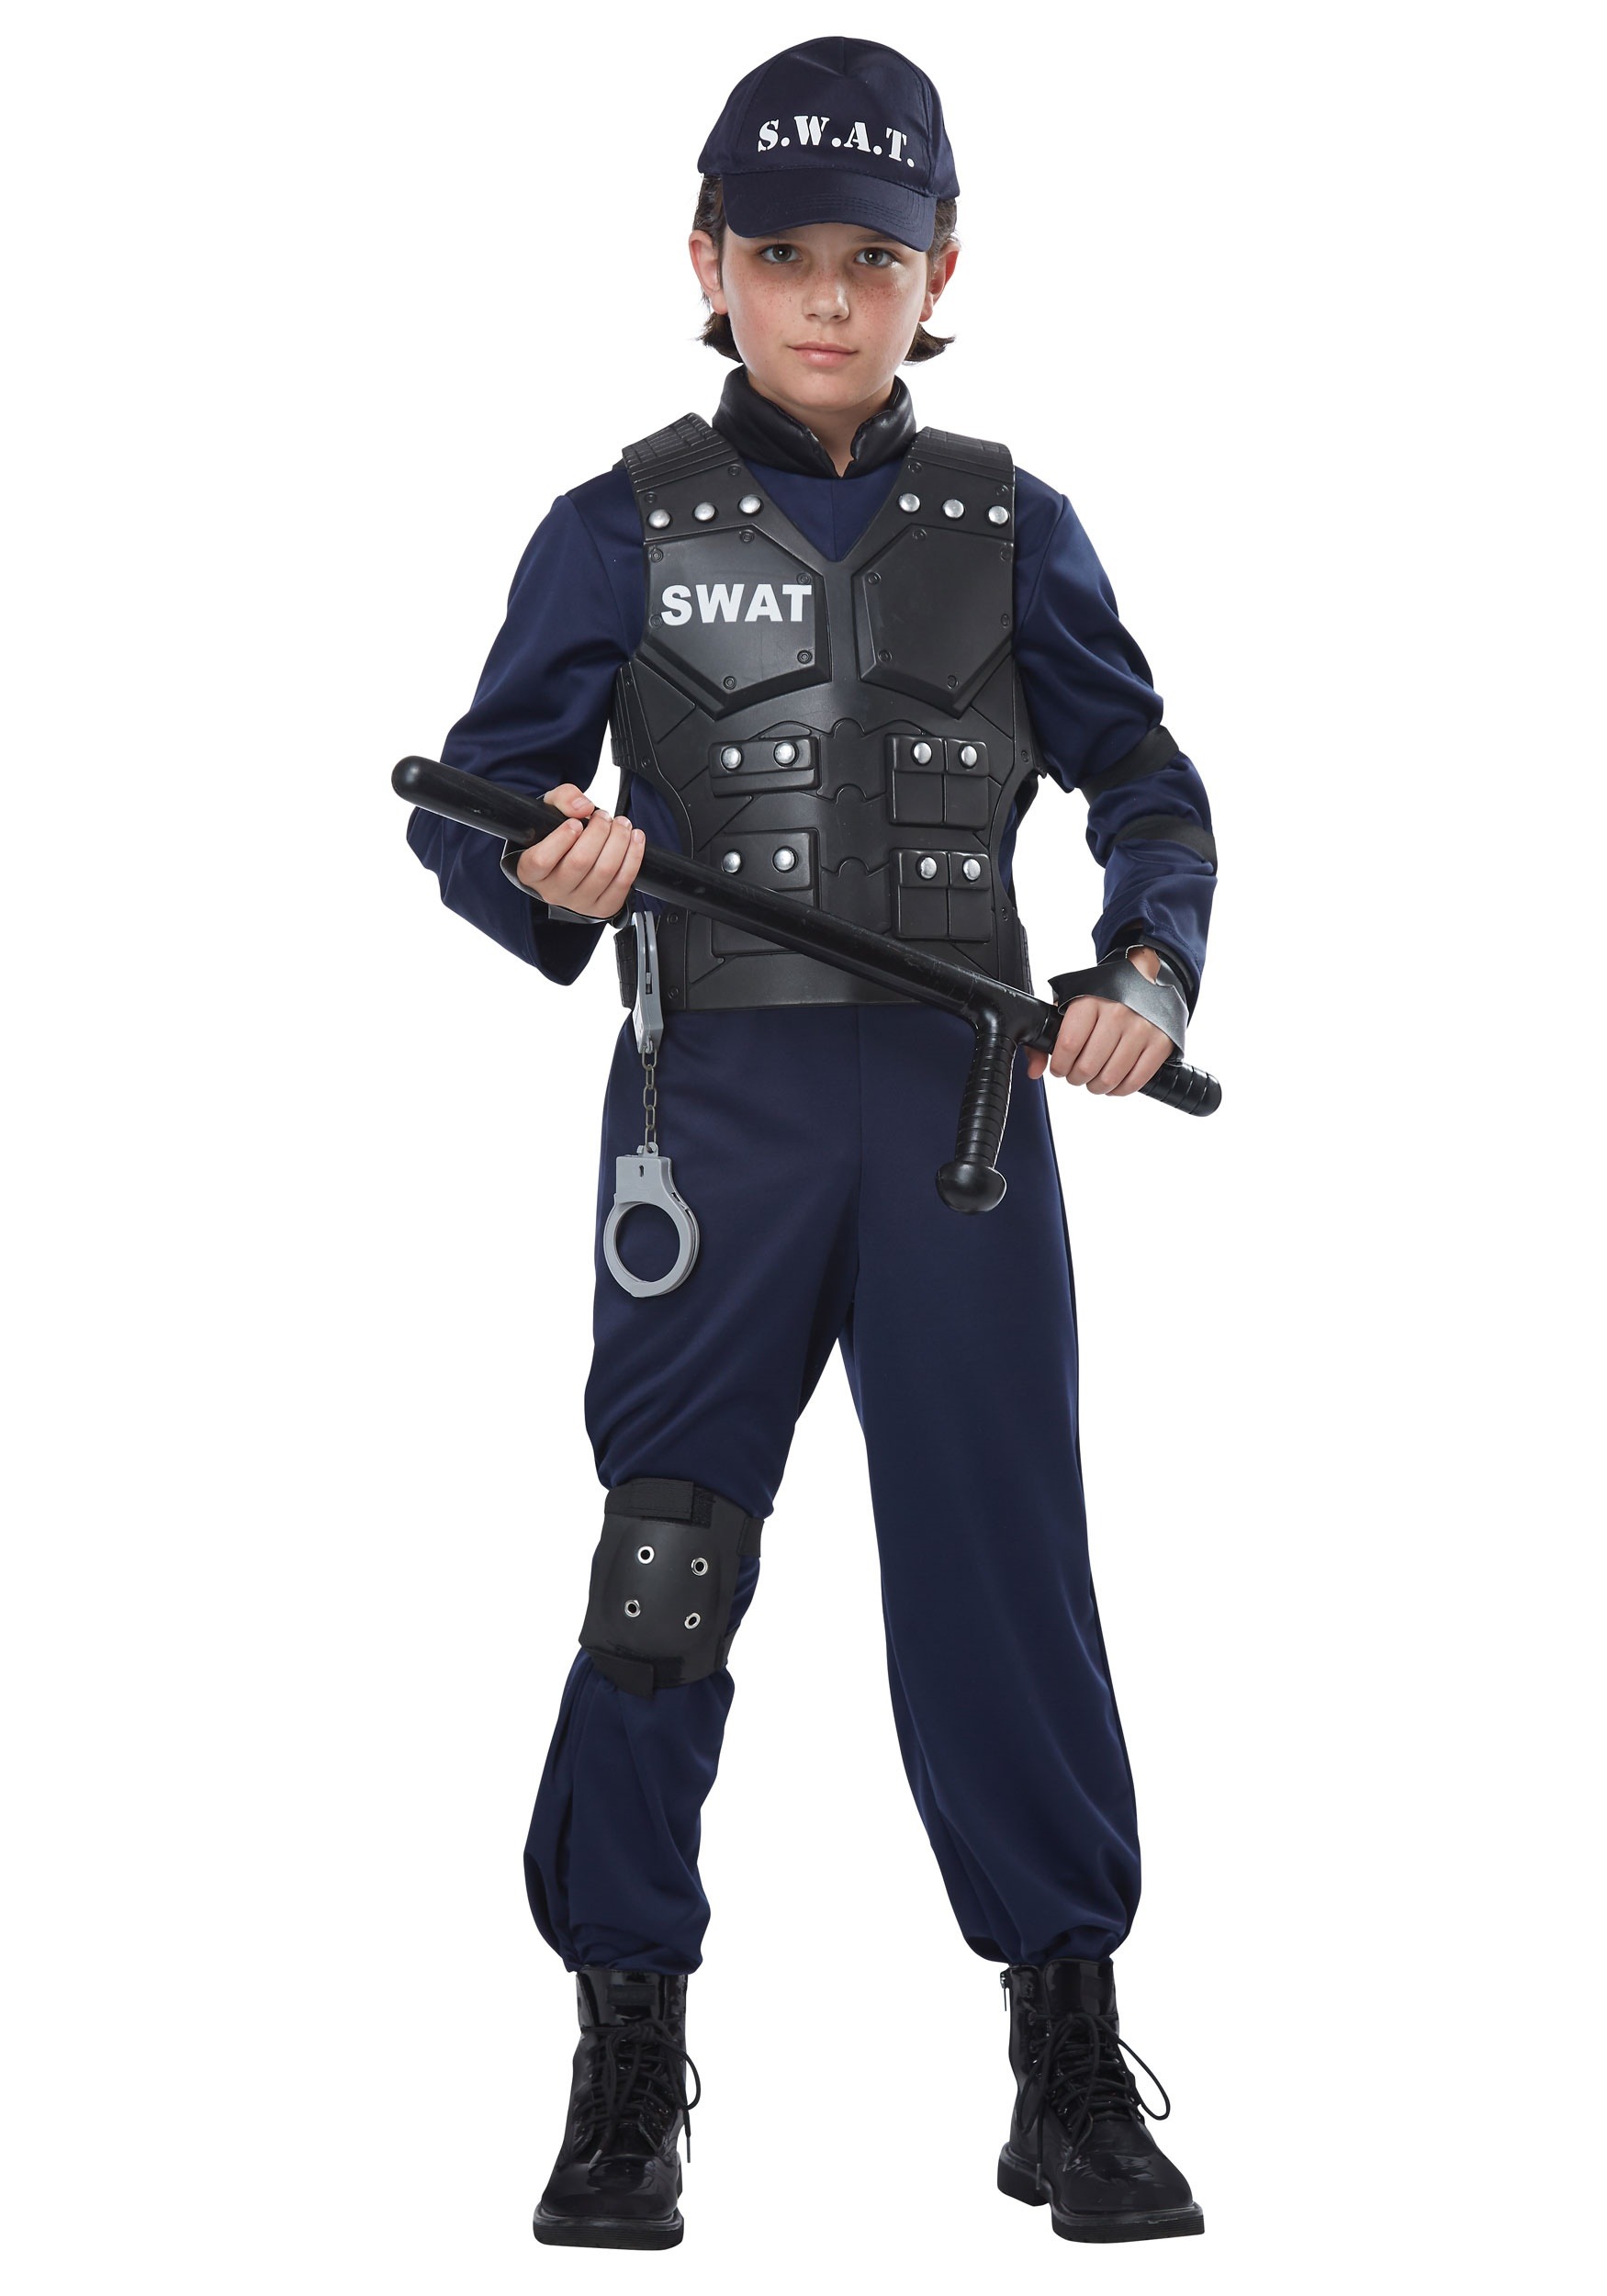 https://images.halloweencostumes.com/products/45827/1-1/child-junior-swat-costume.jpg